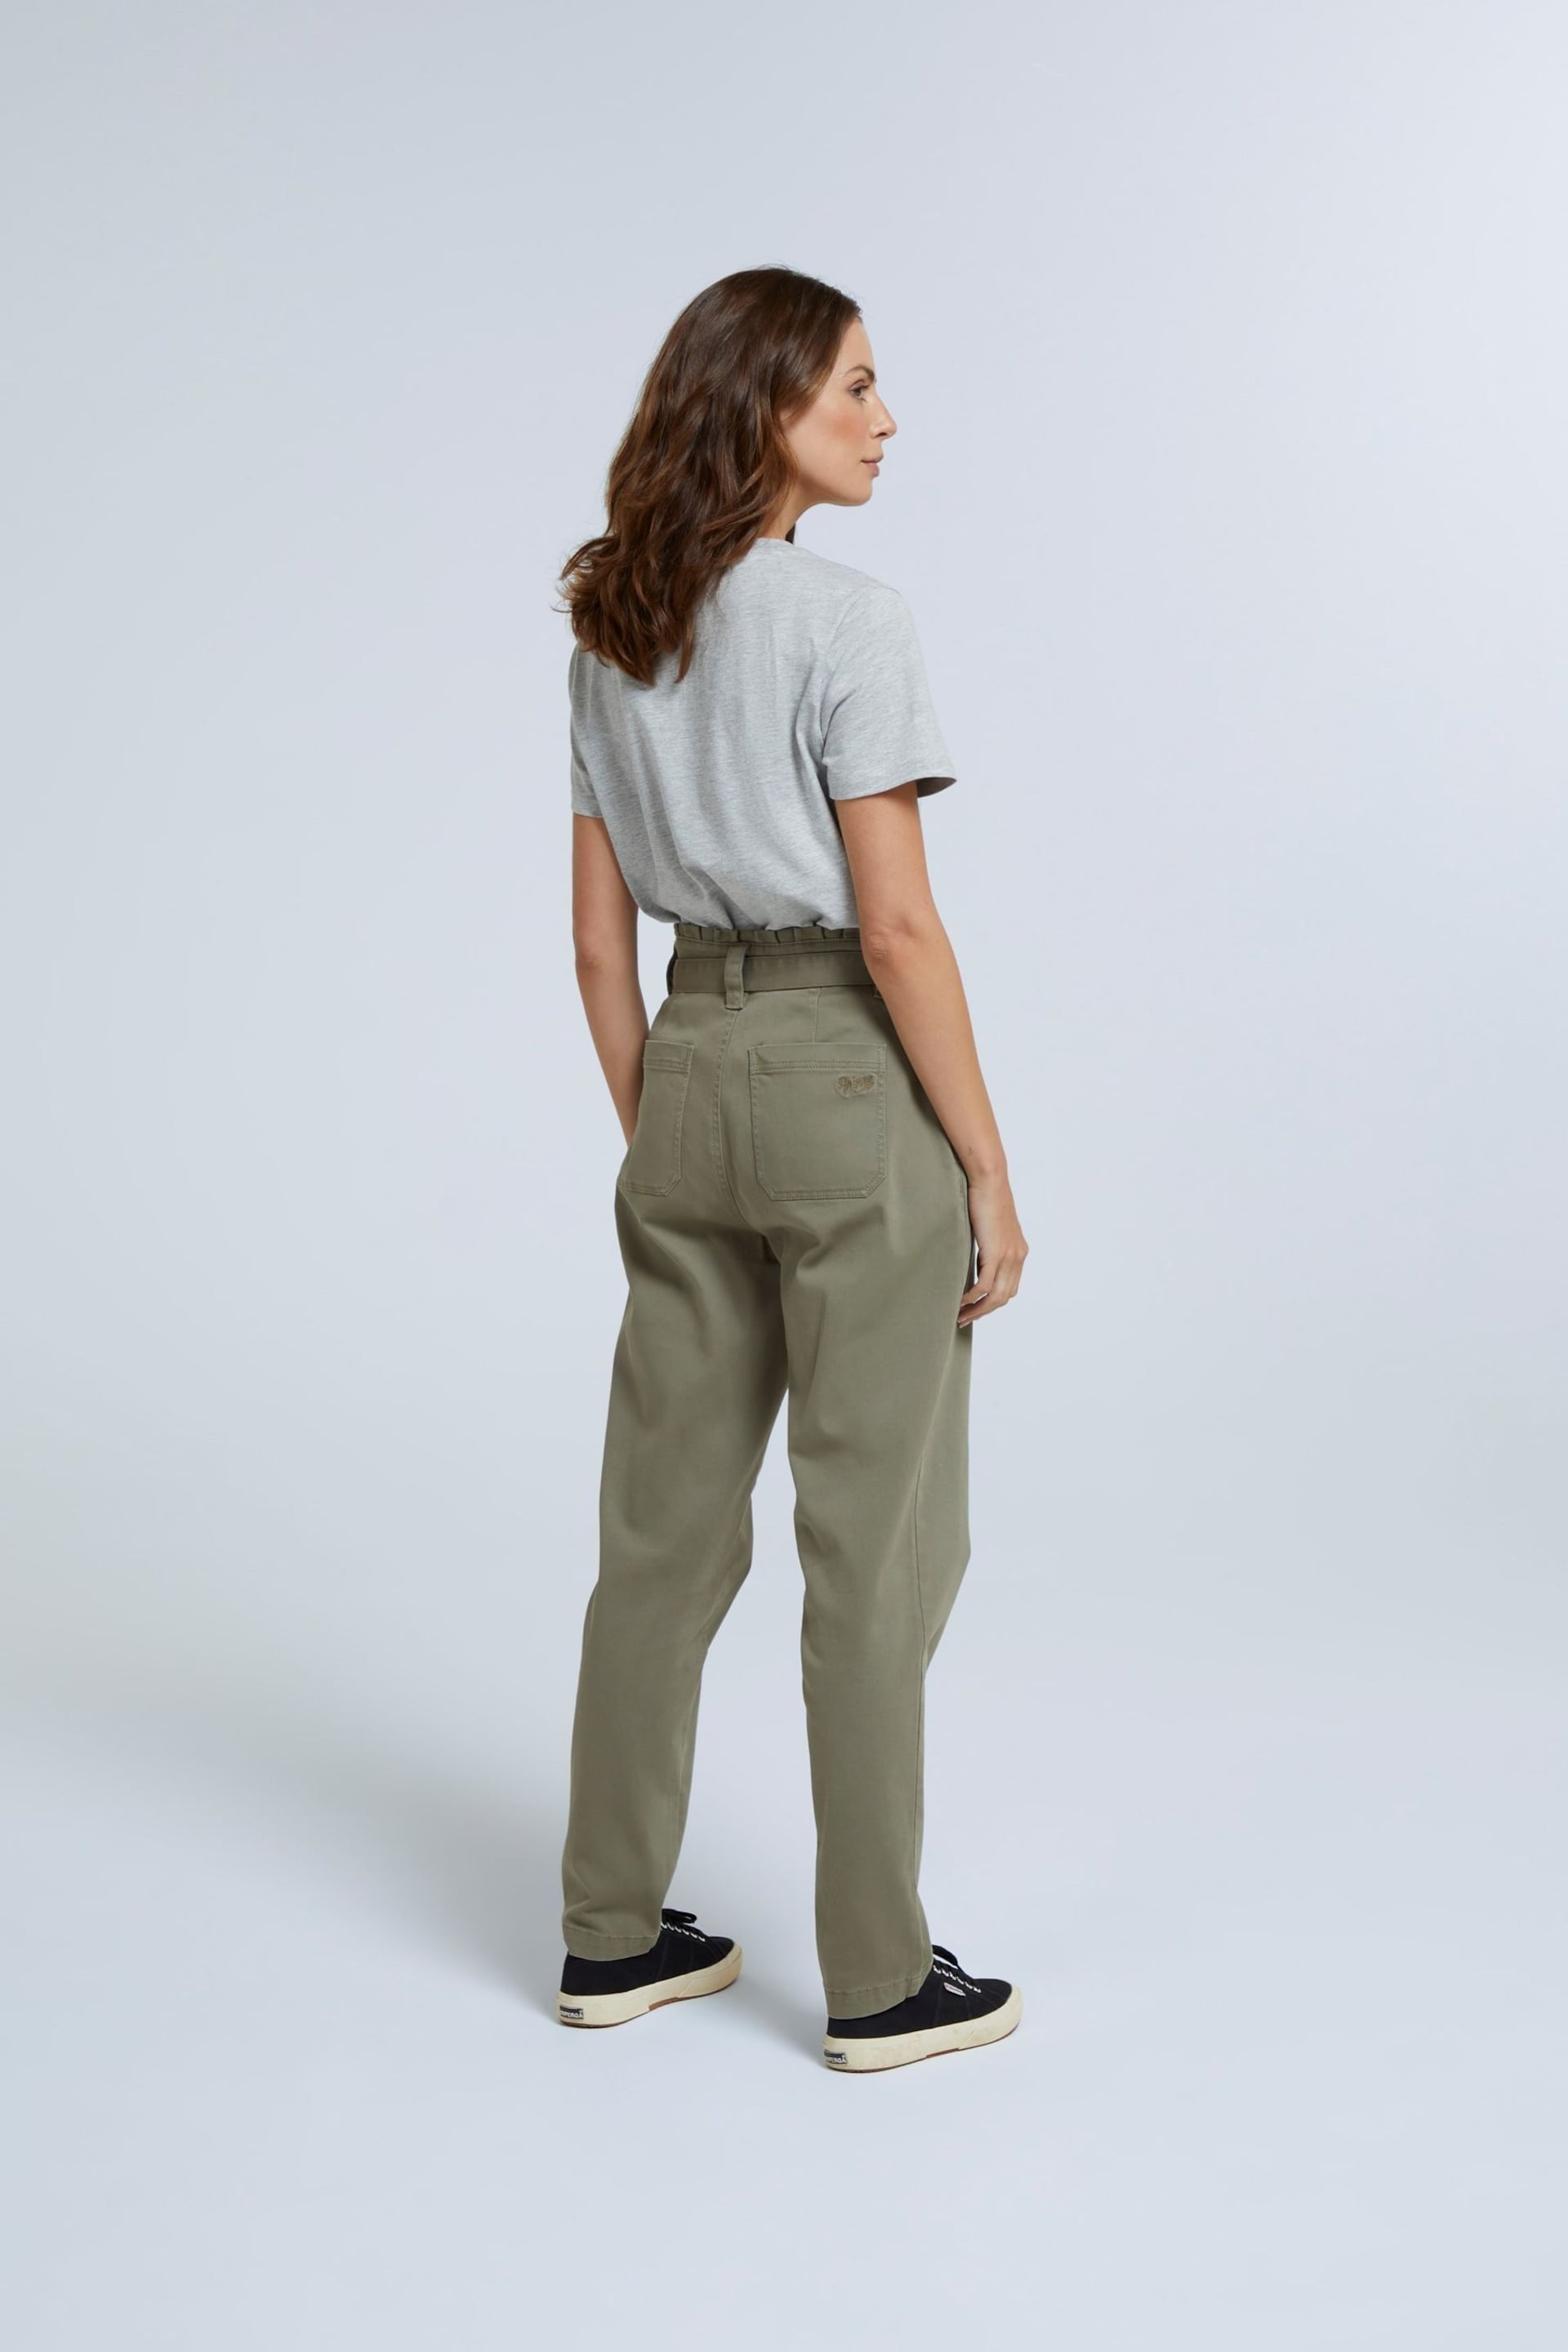 Animal Loren Womens Organic Trousers - Image 4 of 8